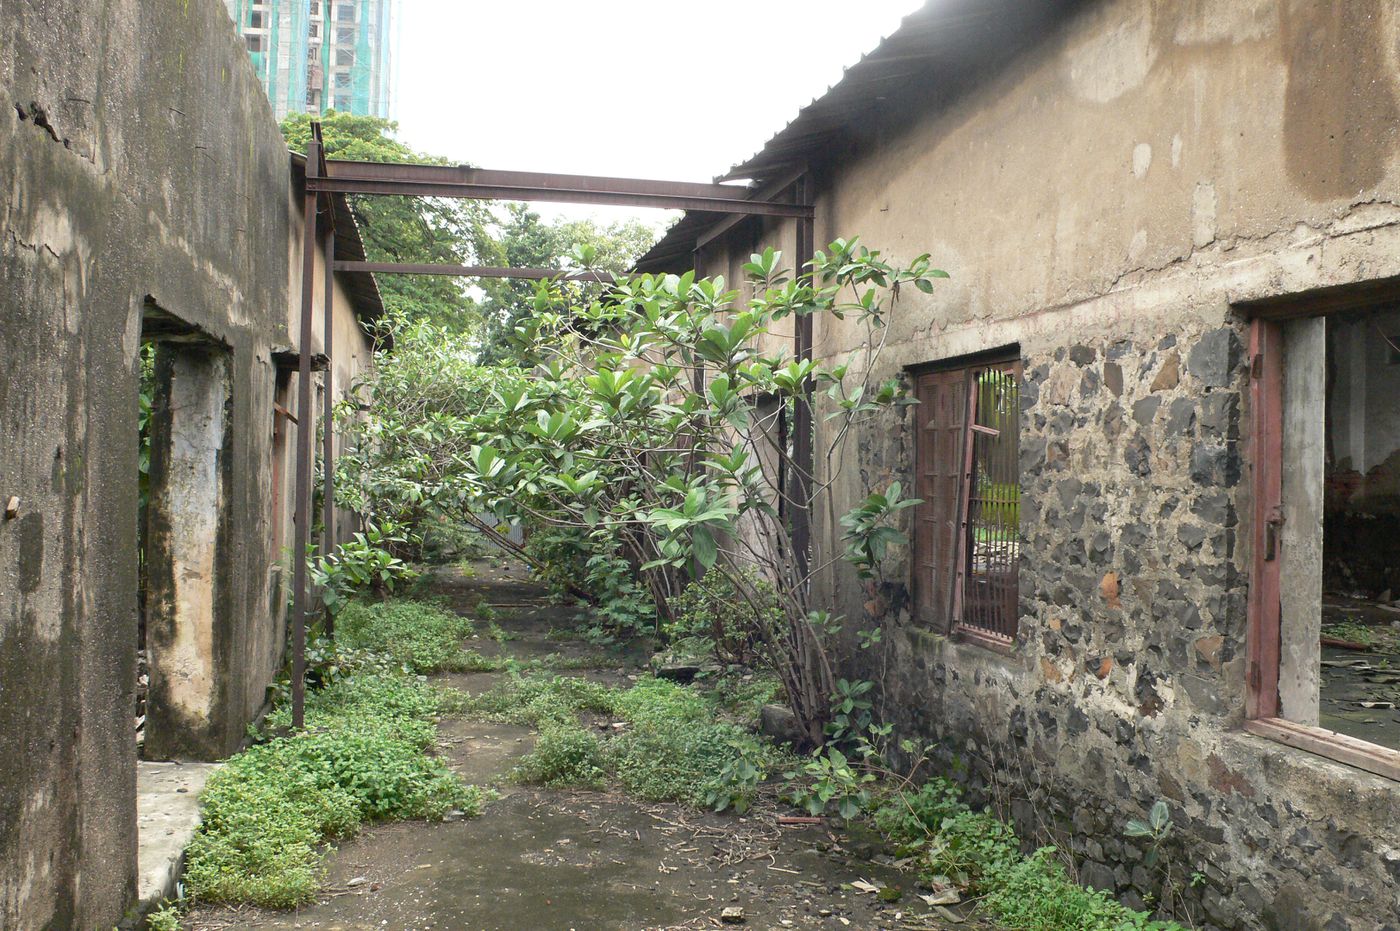 Saat Rasta : overgrown vegetation in existing building